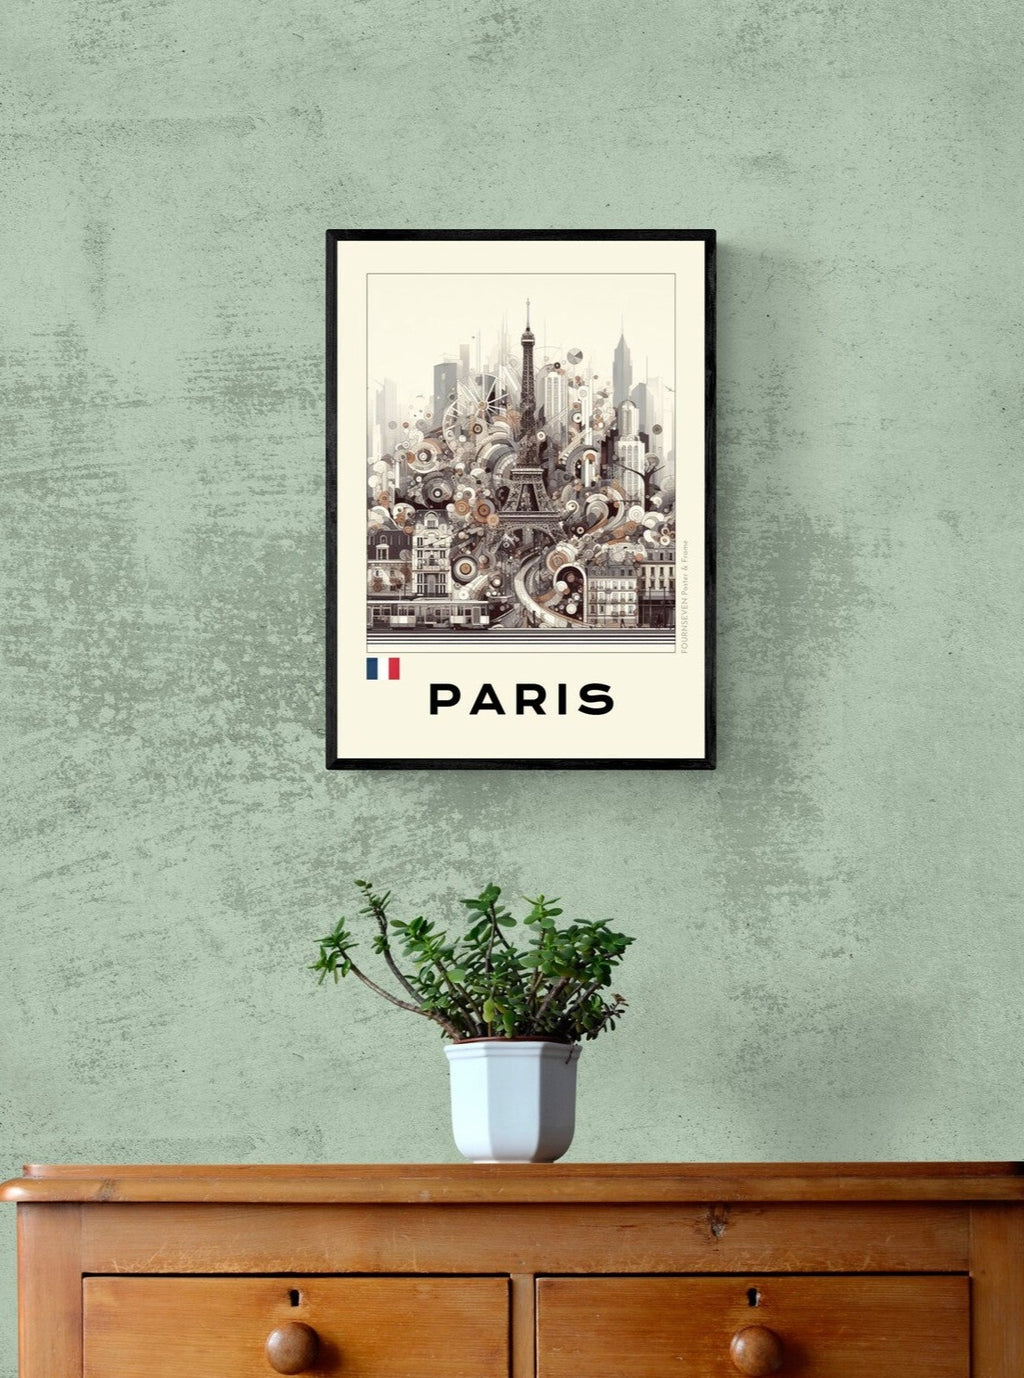 PARIS abstract digital artwork poster.